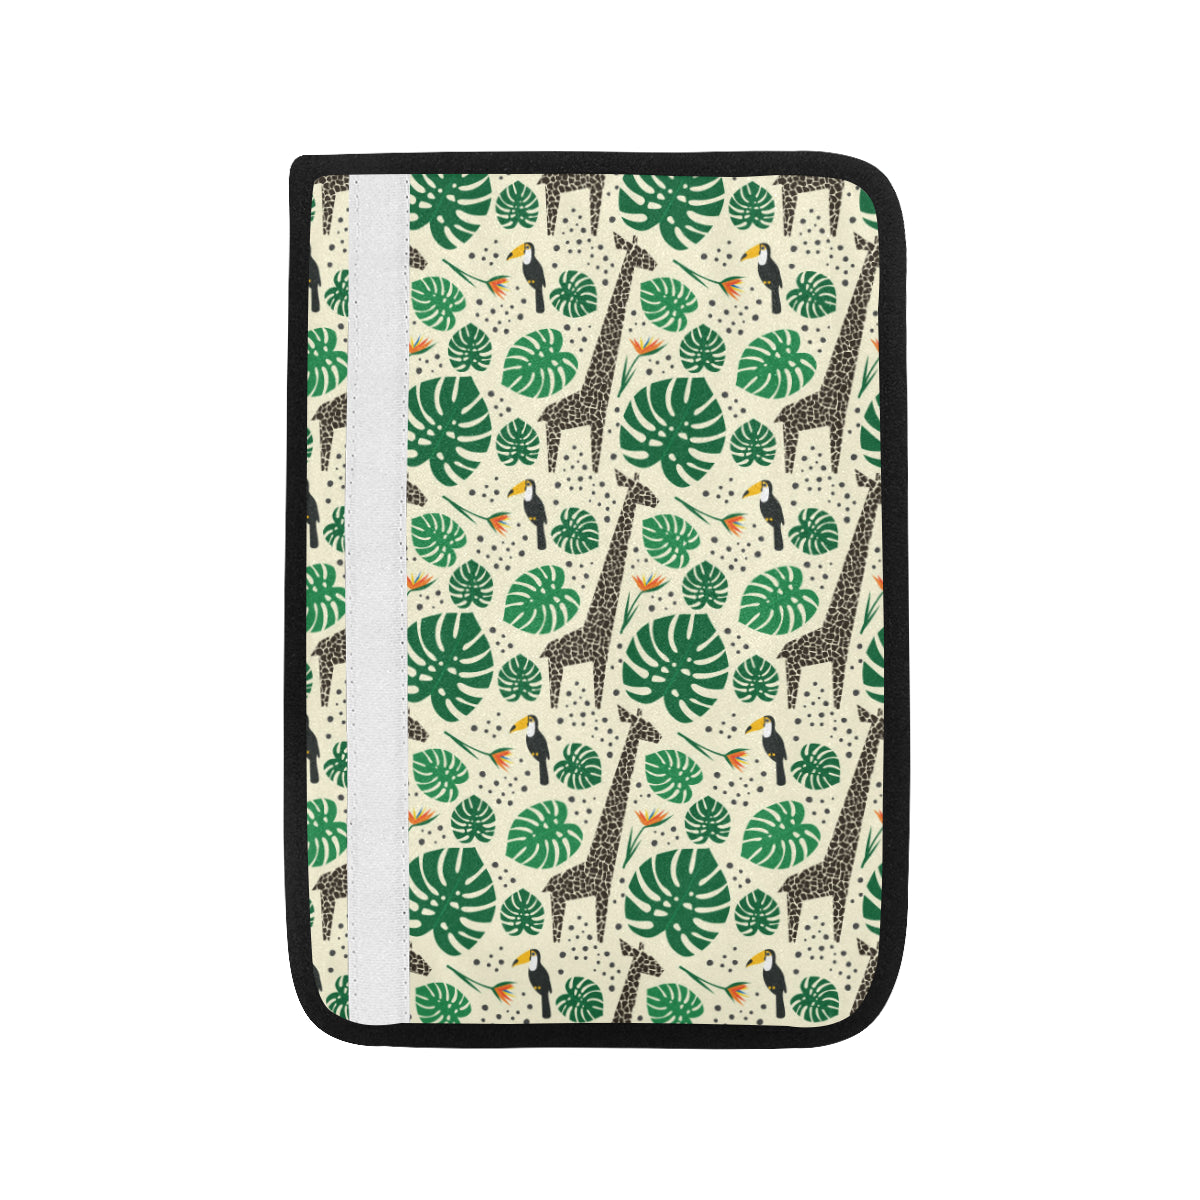 Rainforest Giraffe Pattern Print Design A02 Car Seat Belt Cover